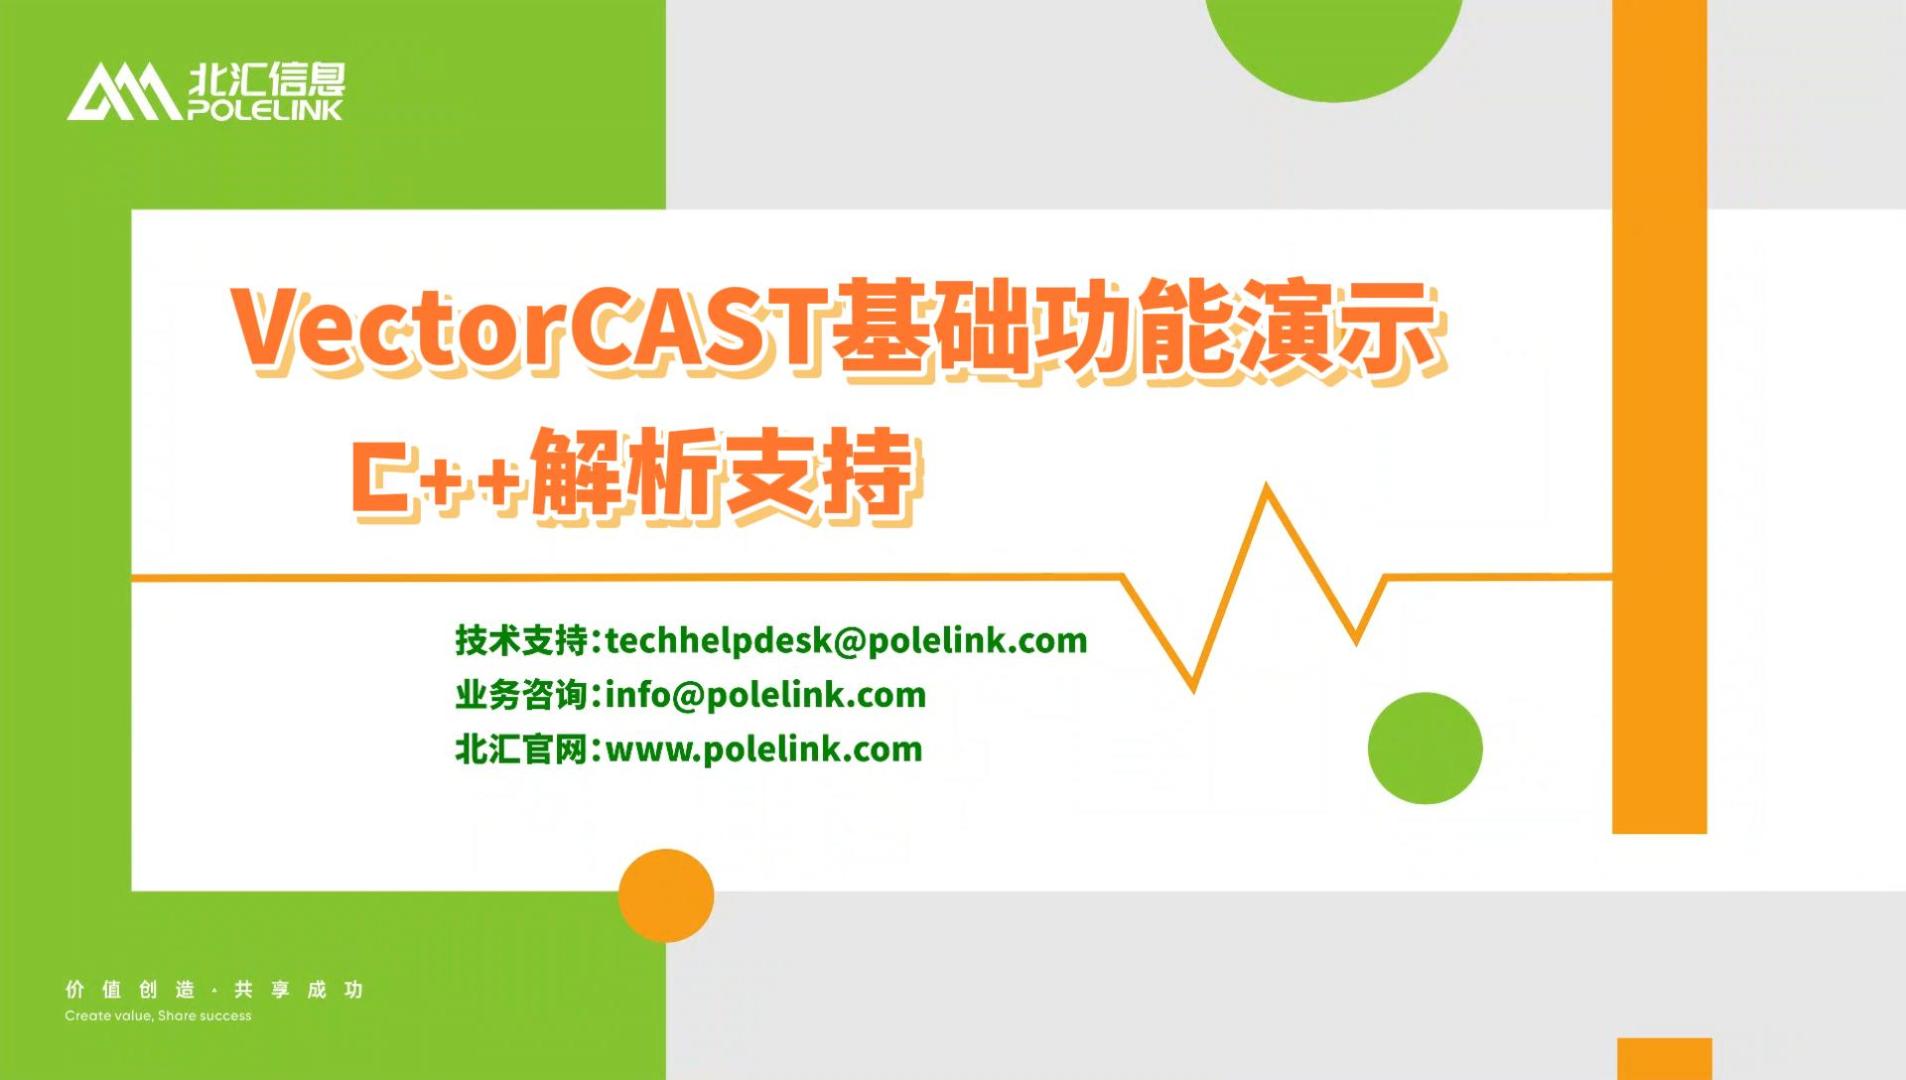 VectorCAST对C++解析支持#动态代码测试
#VectorCAST
 